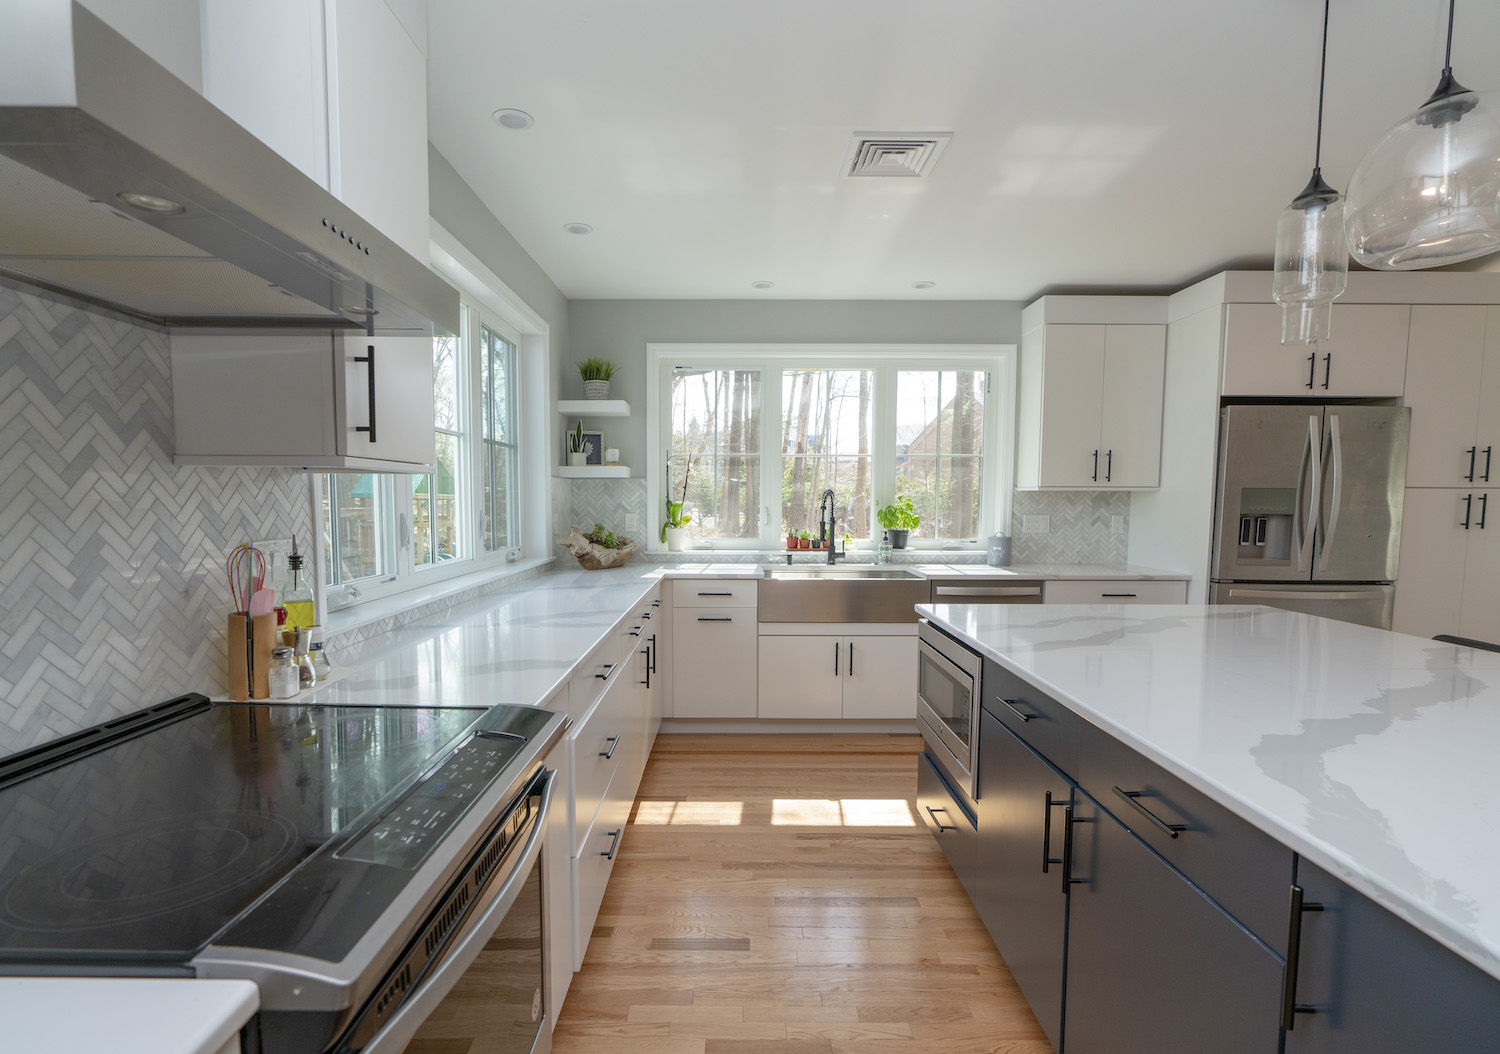 new kitchen with white granite countertops